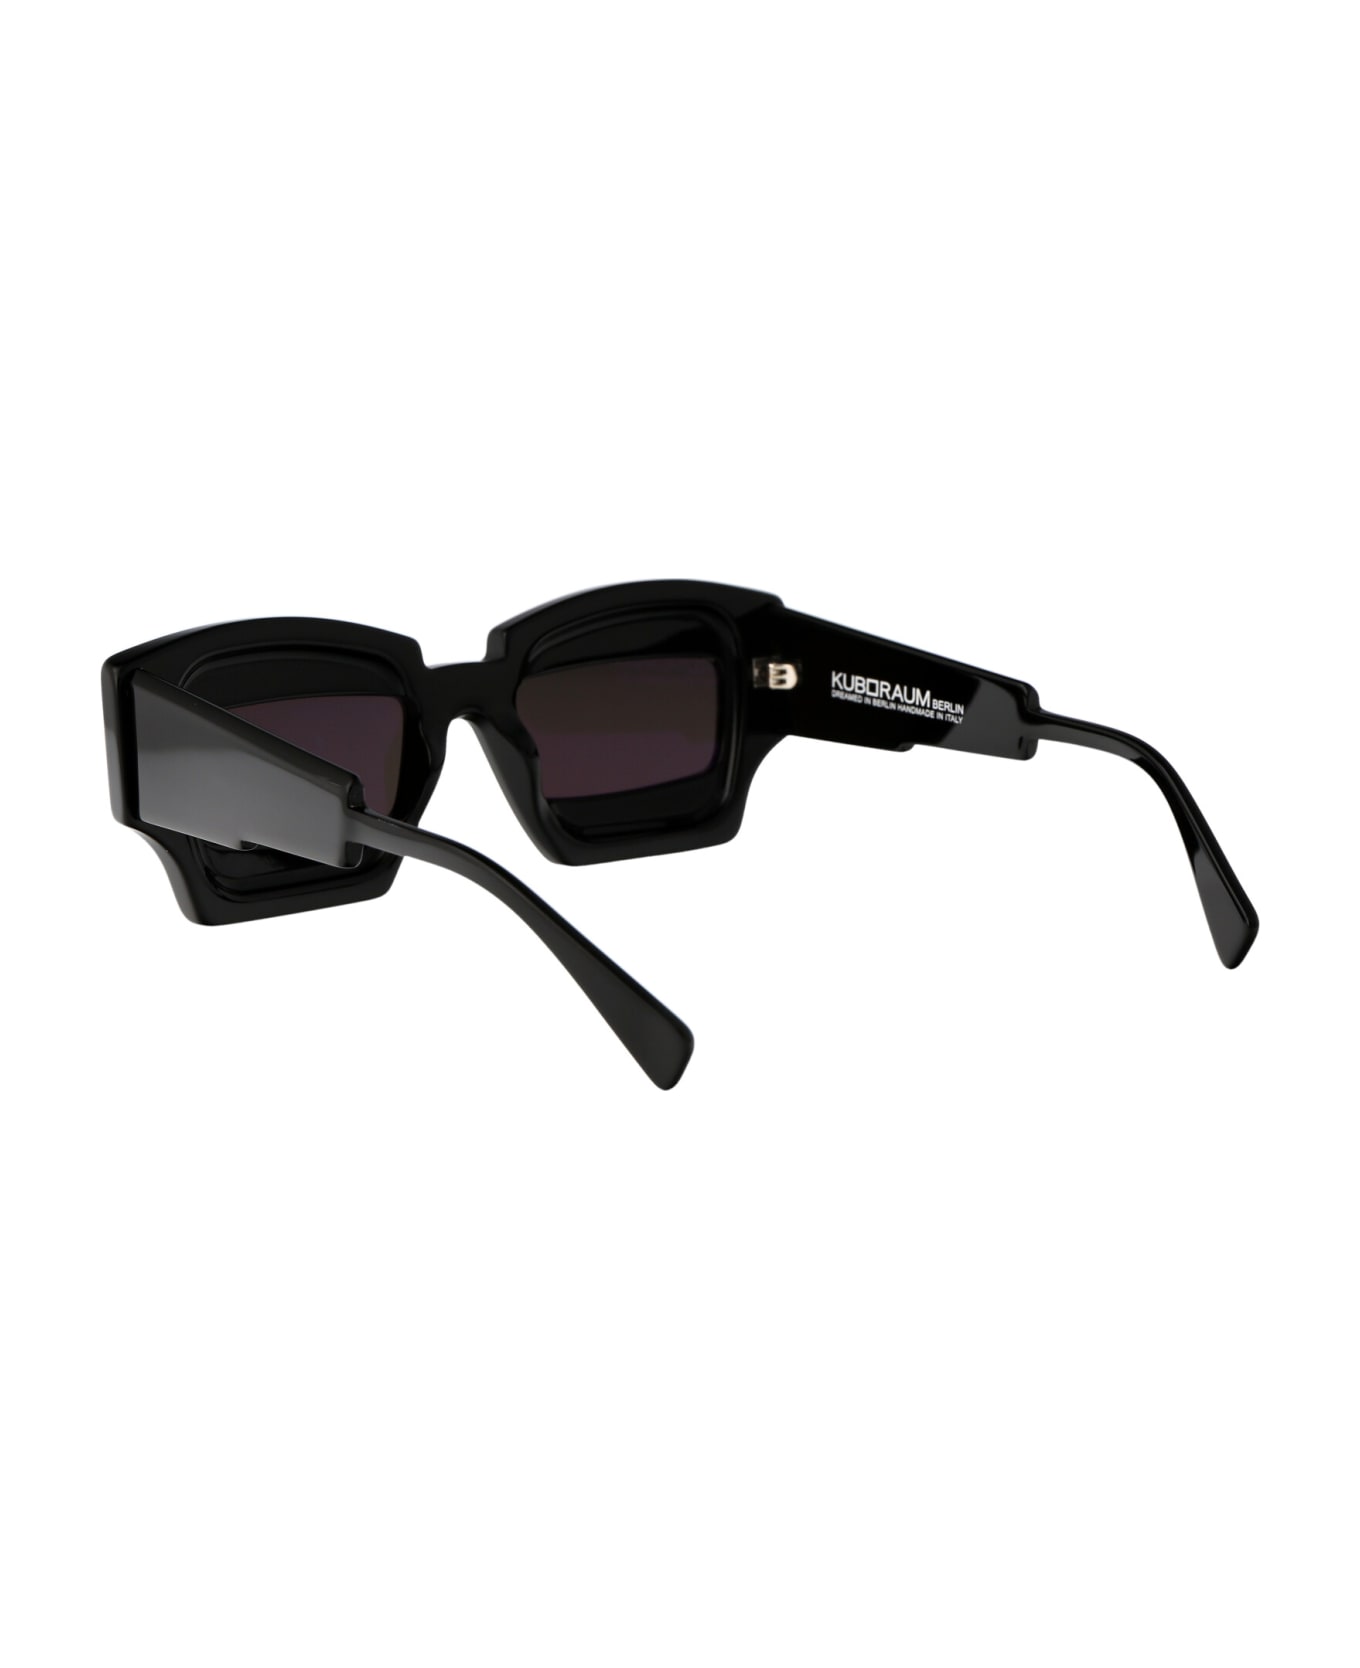 Kuboraum Maske X6 Sunglasses - BS dark brown サングラス